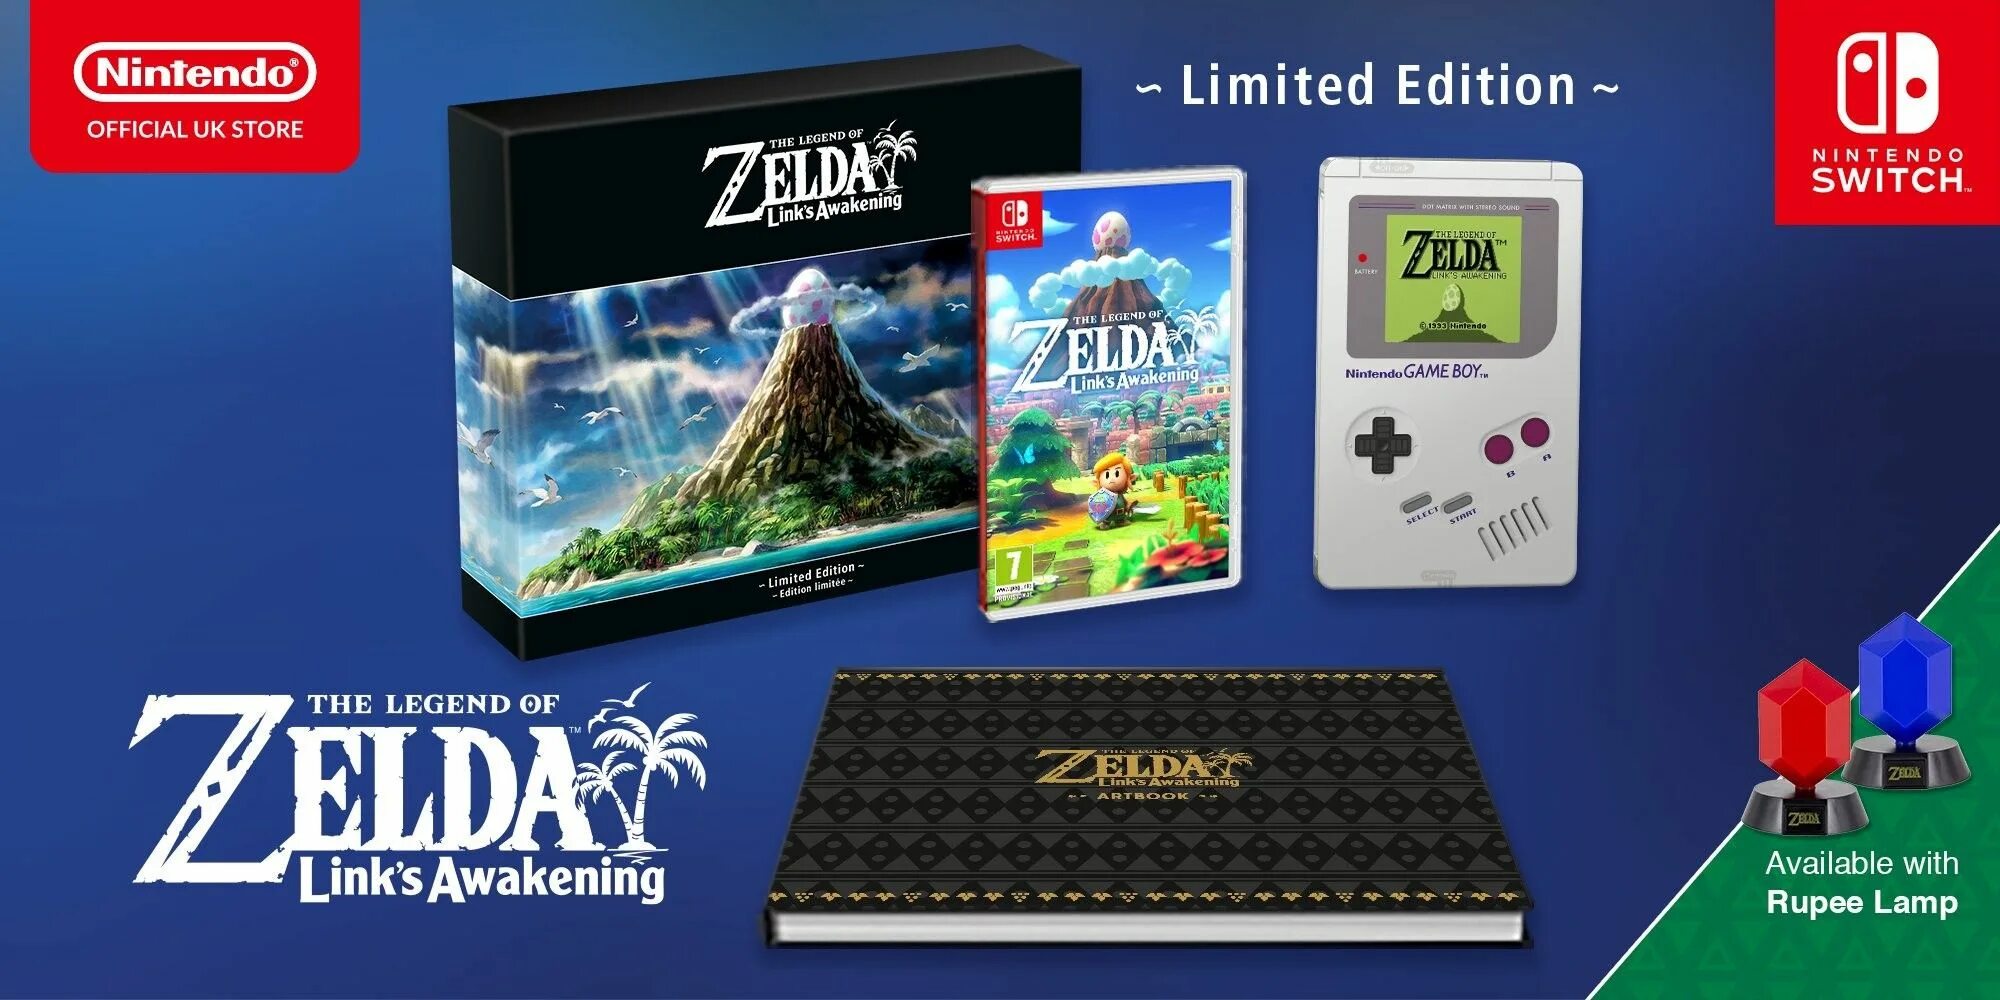 Nintendo Switch the Legend of Zelda Limited Edition. Zelda link's Awakening Nintendo Switch коллекционное издание. The Legend of Zelda 2 коллекционное издание. Линк Зельда Нинтендо.